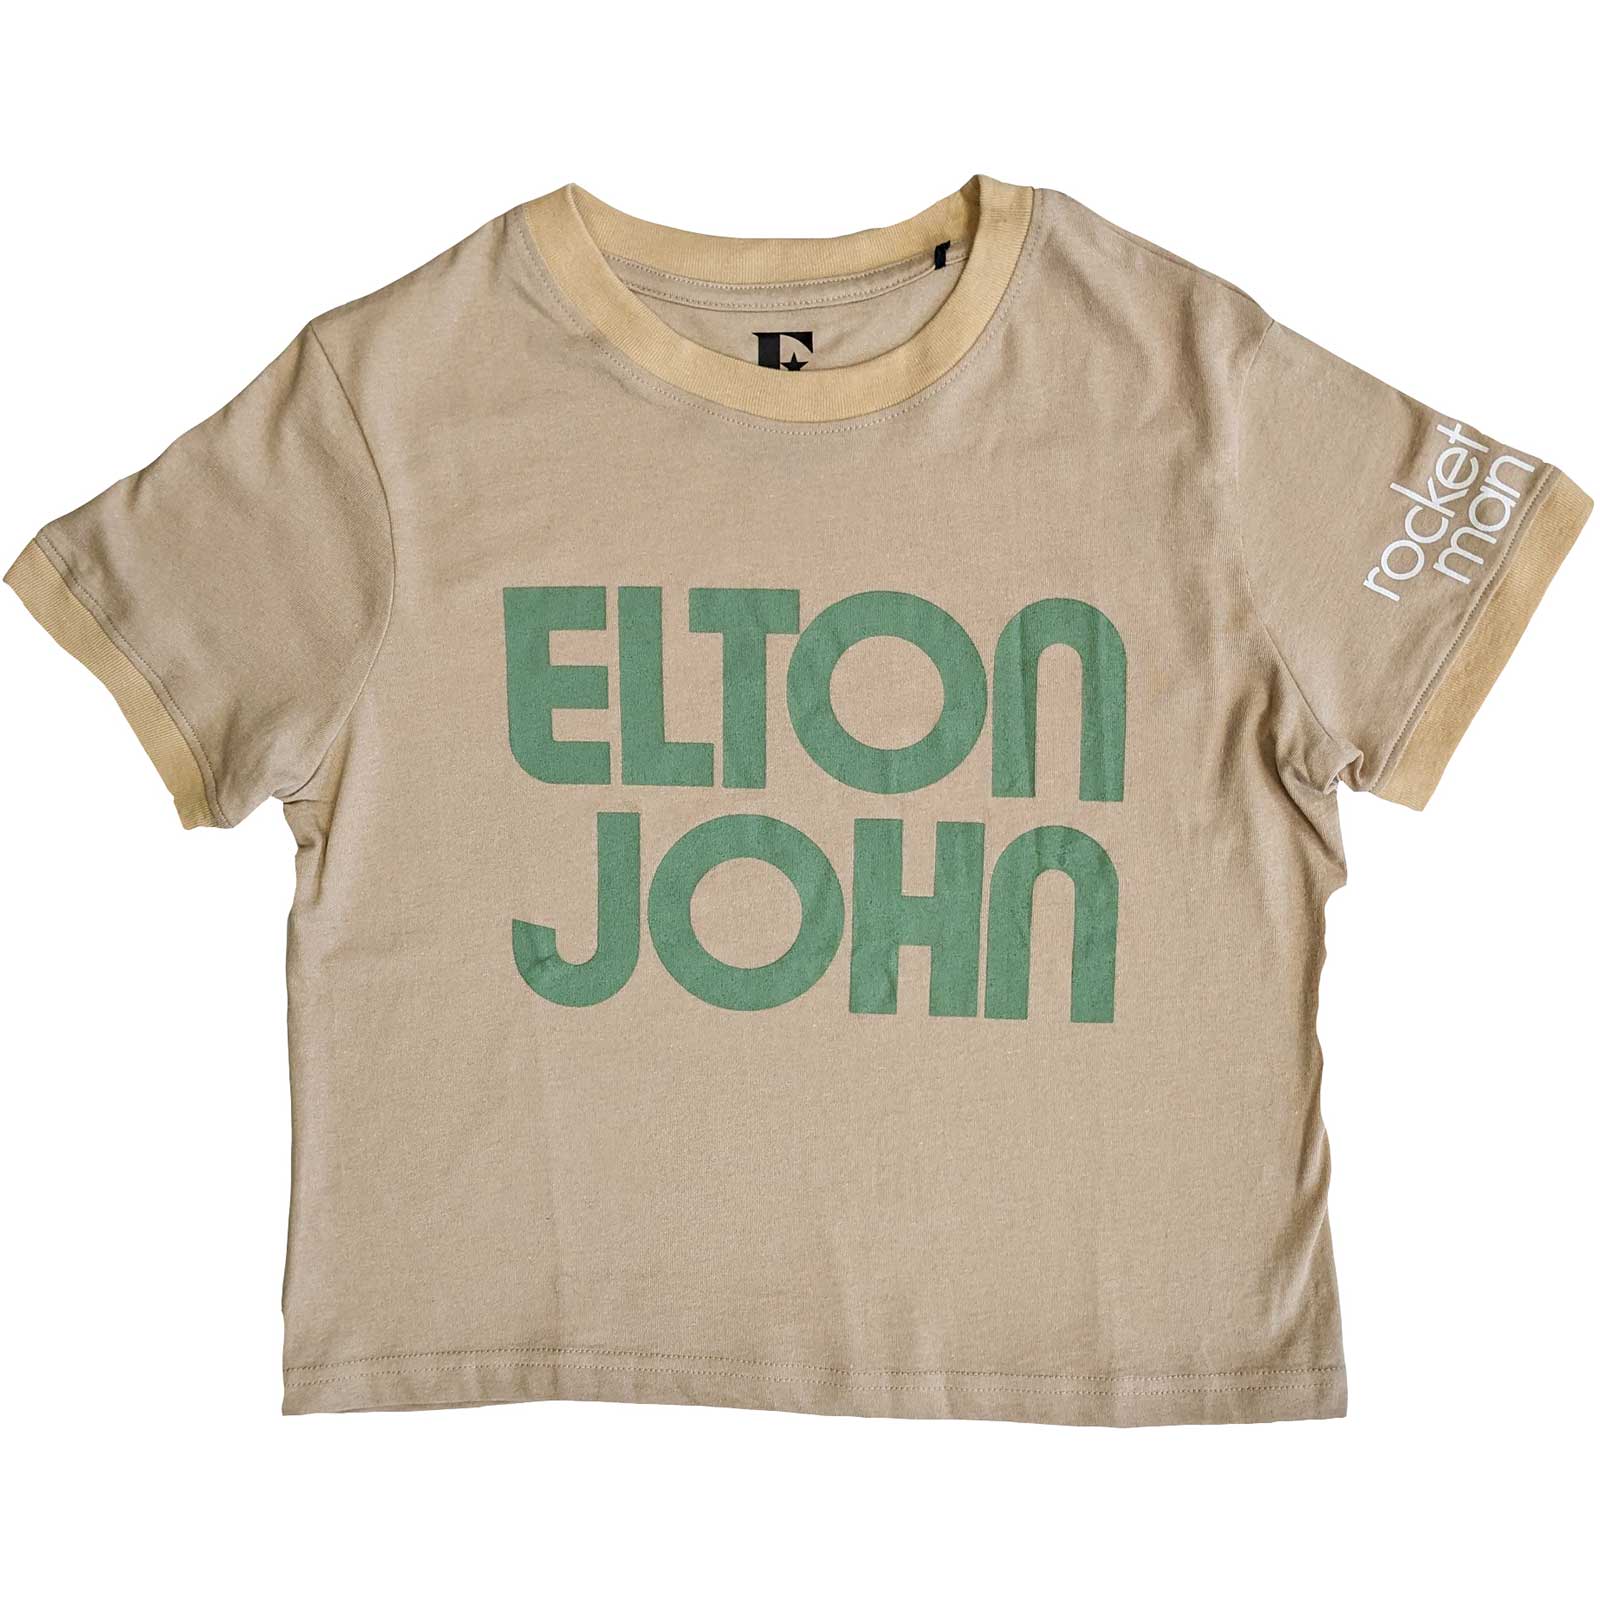 Elton John Crop Top Tee